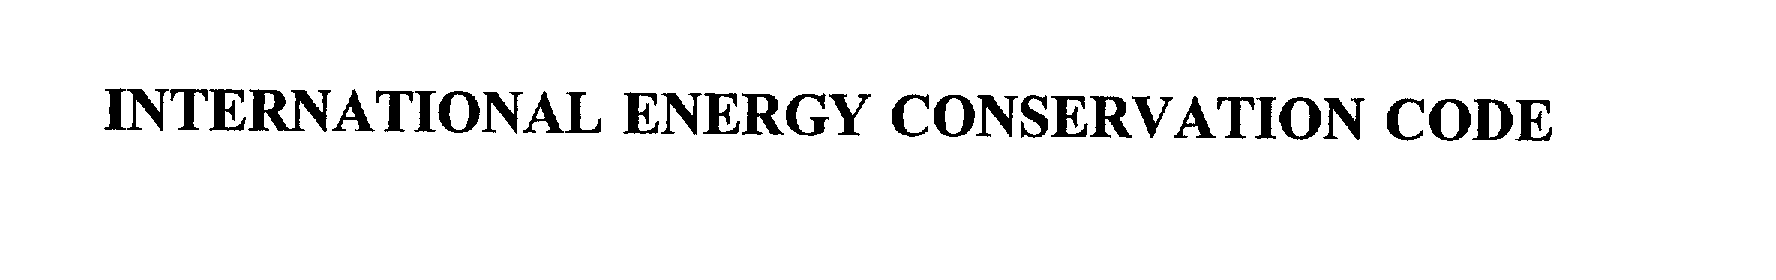 INTERNATIONAL ENERGY CONSERVATION CODE